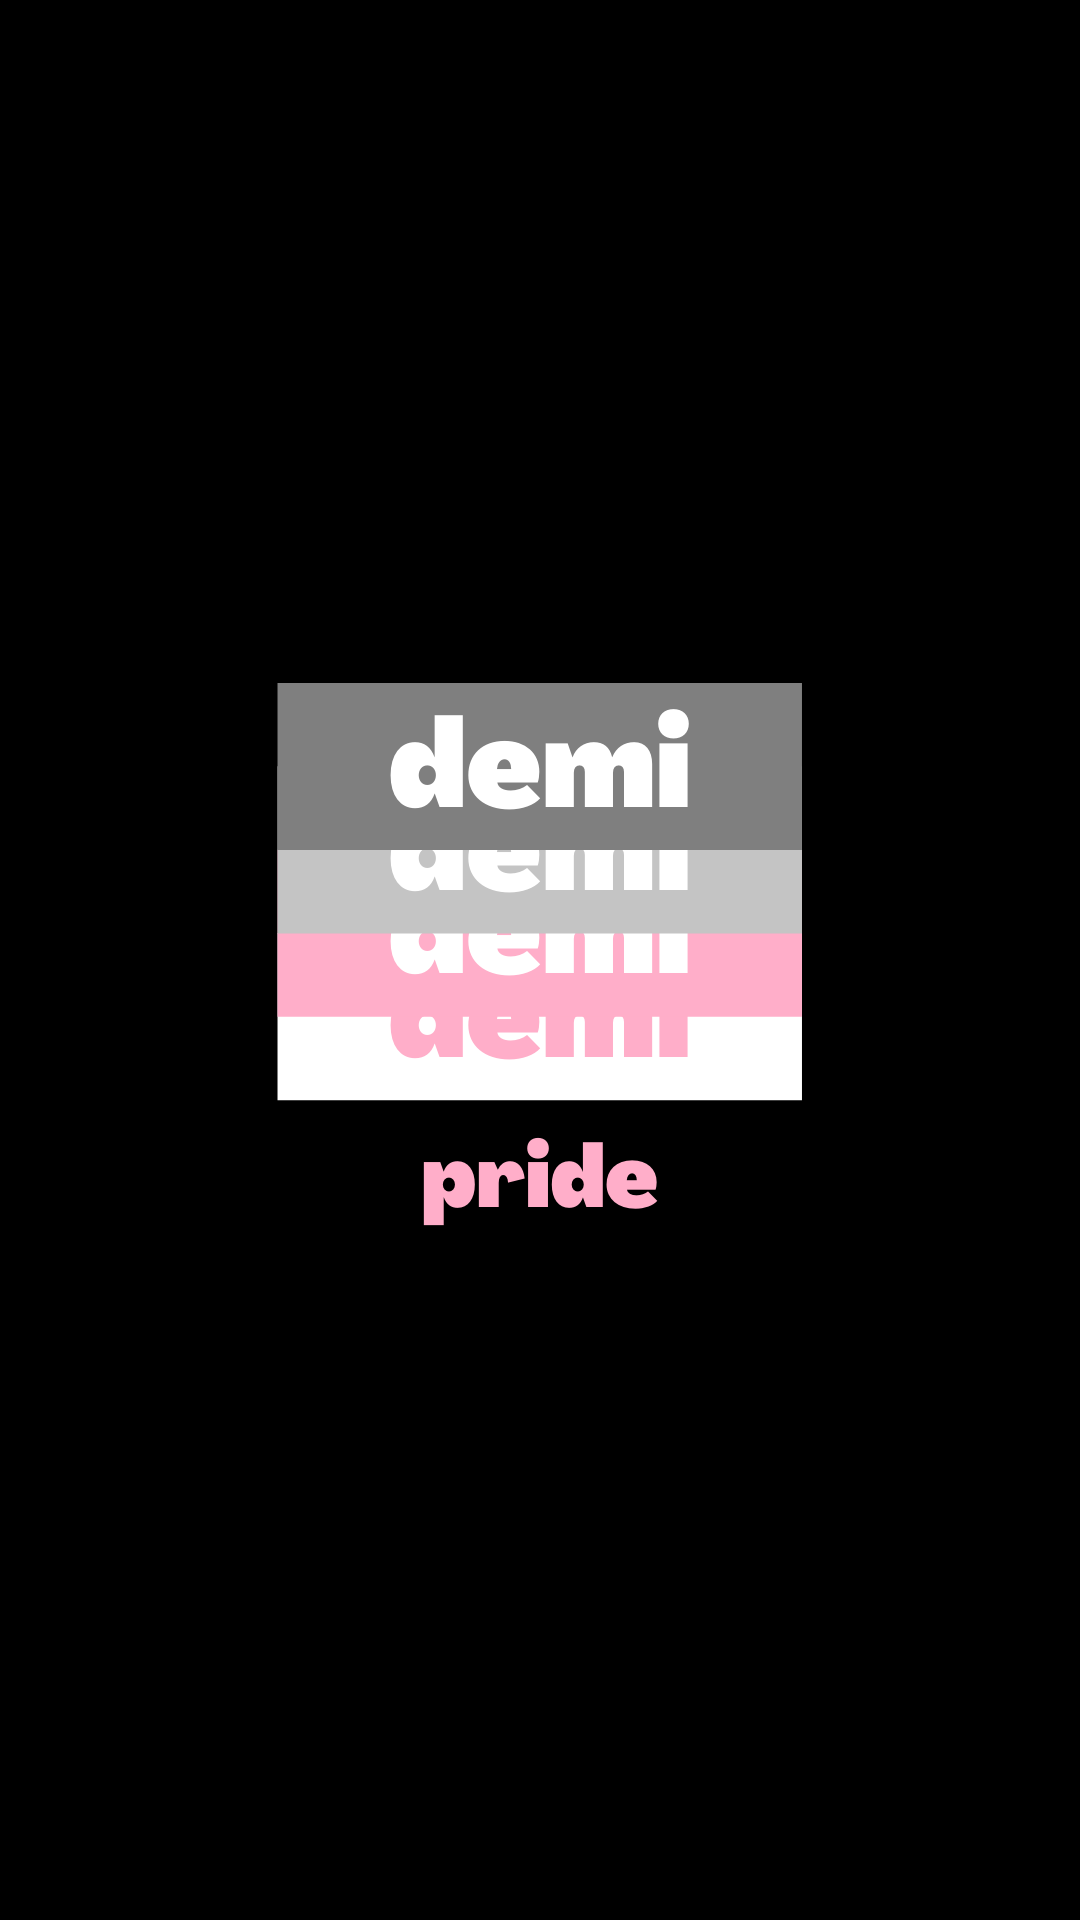 Demigirl Pride Aesthetics. Demigirl Wallpaper. Pride, Lgbtqa, Lgbtq